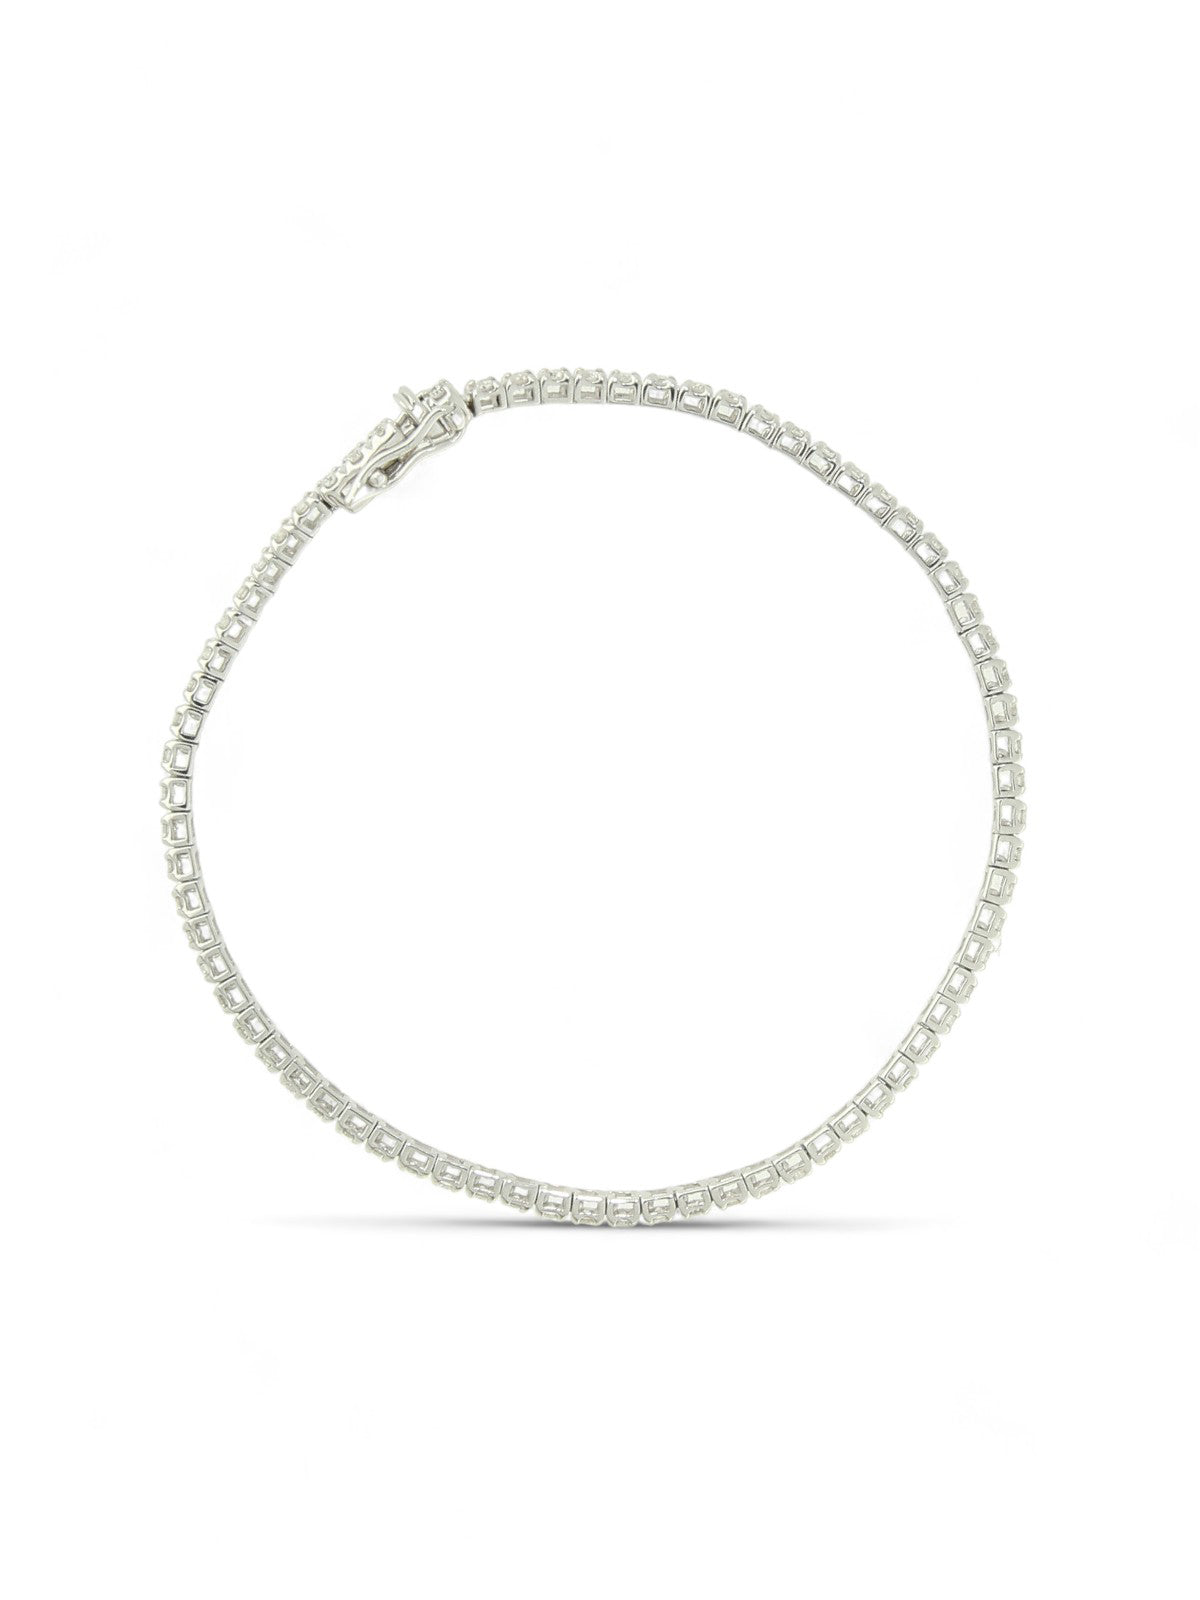 Diamond Tennis Bracelet 1.00ct in 18ct White Gold